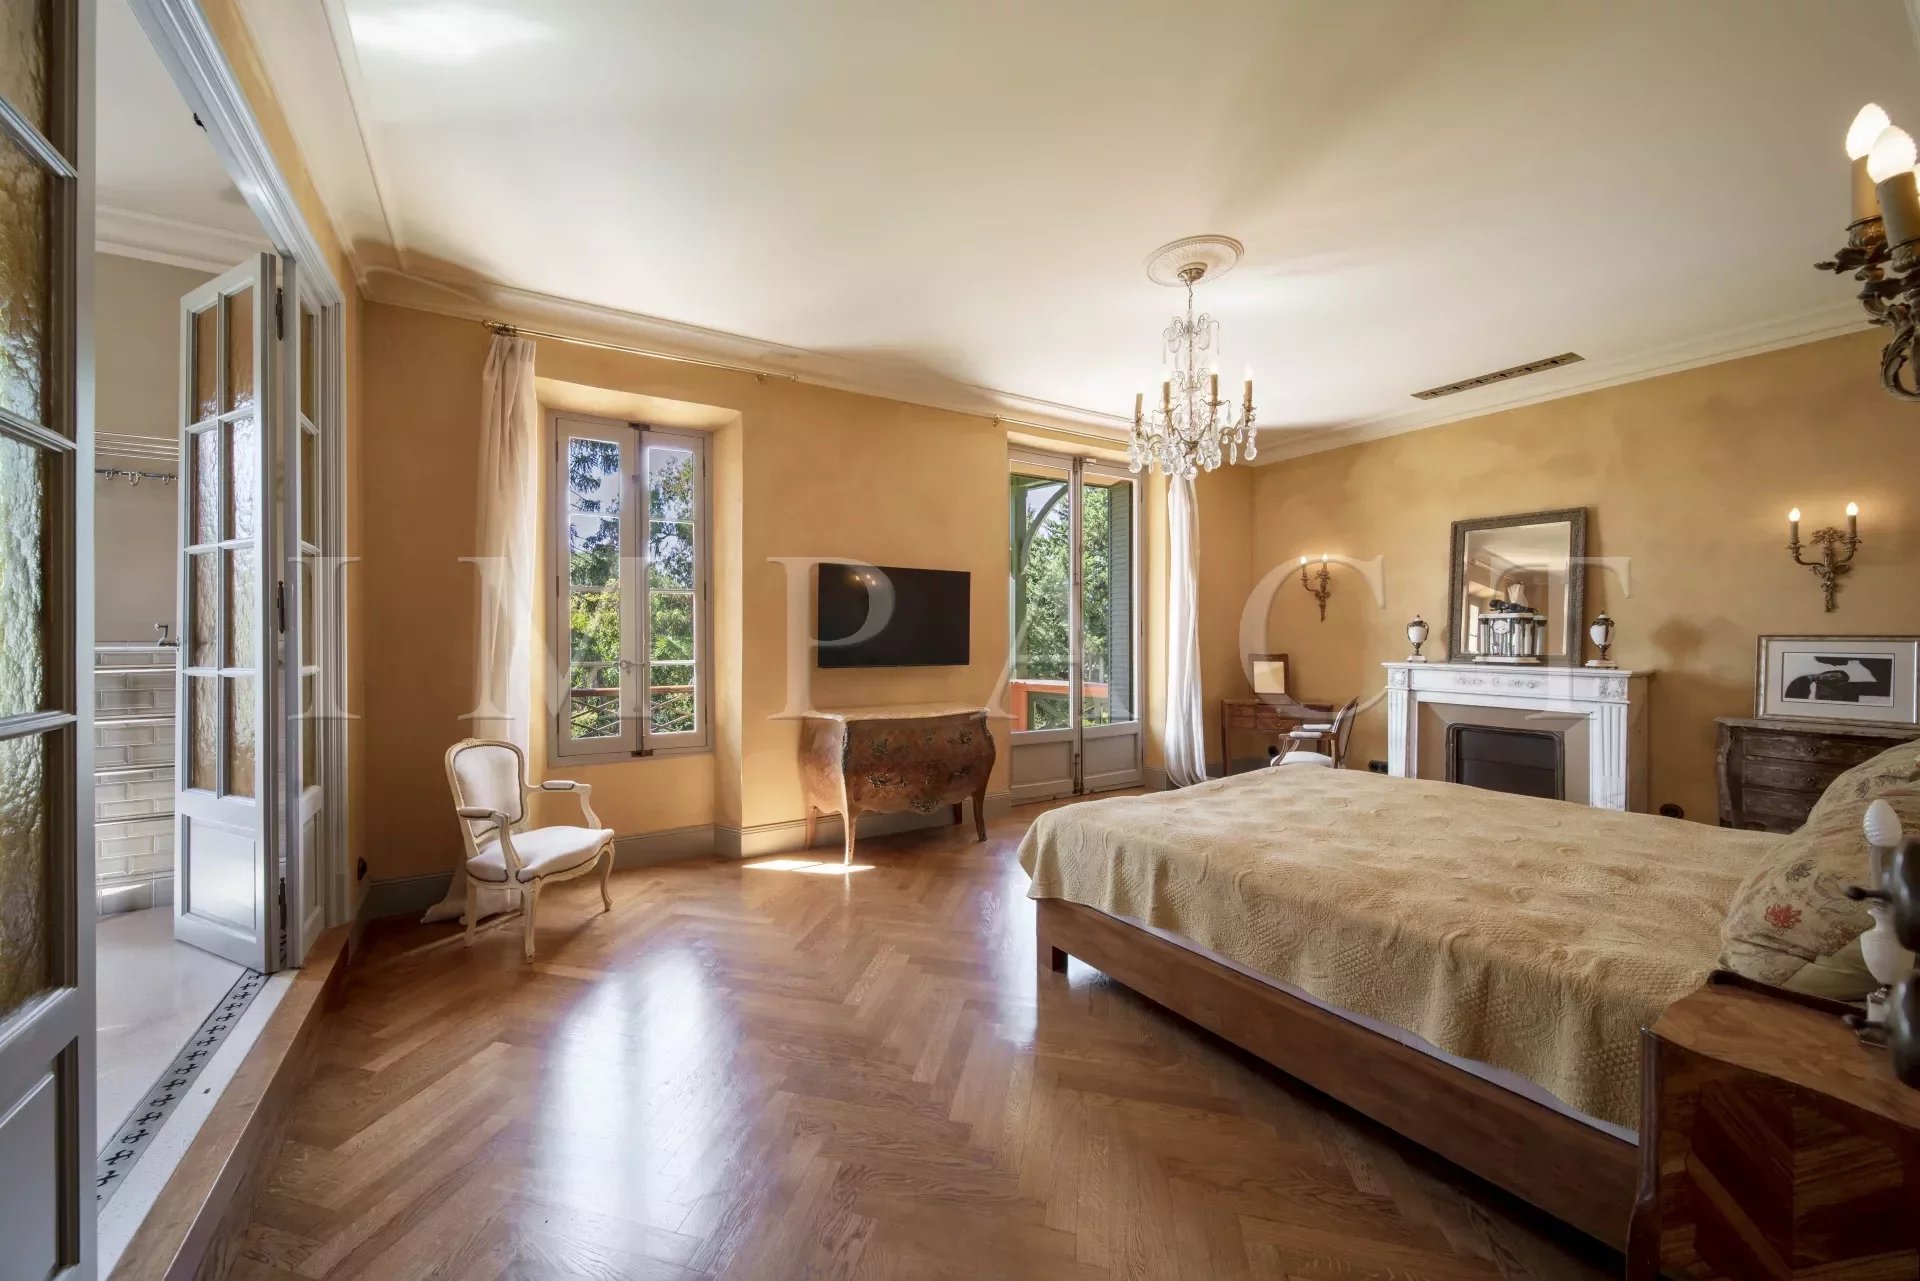 4 Bedrooms villa to rent in Cannes